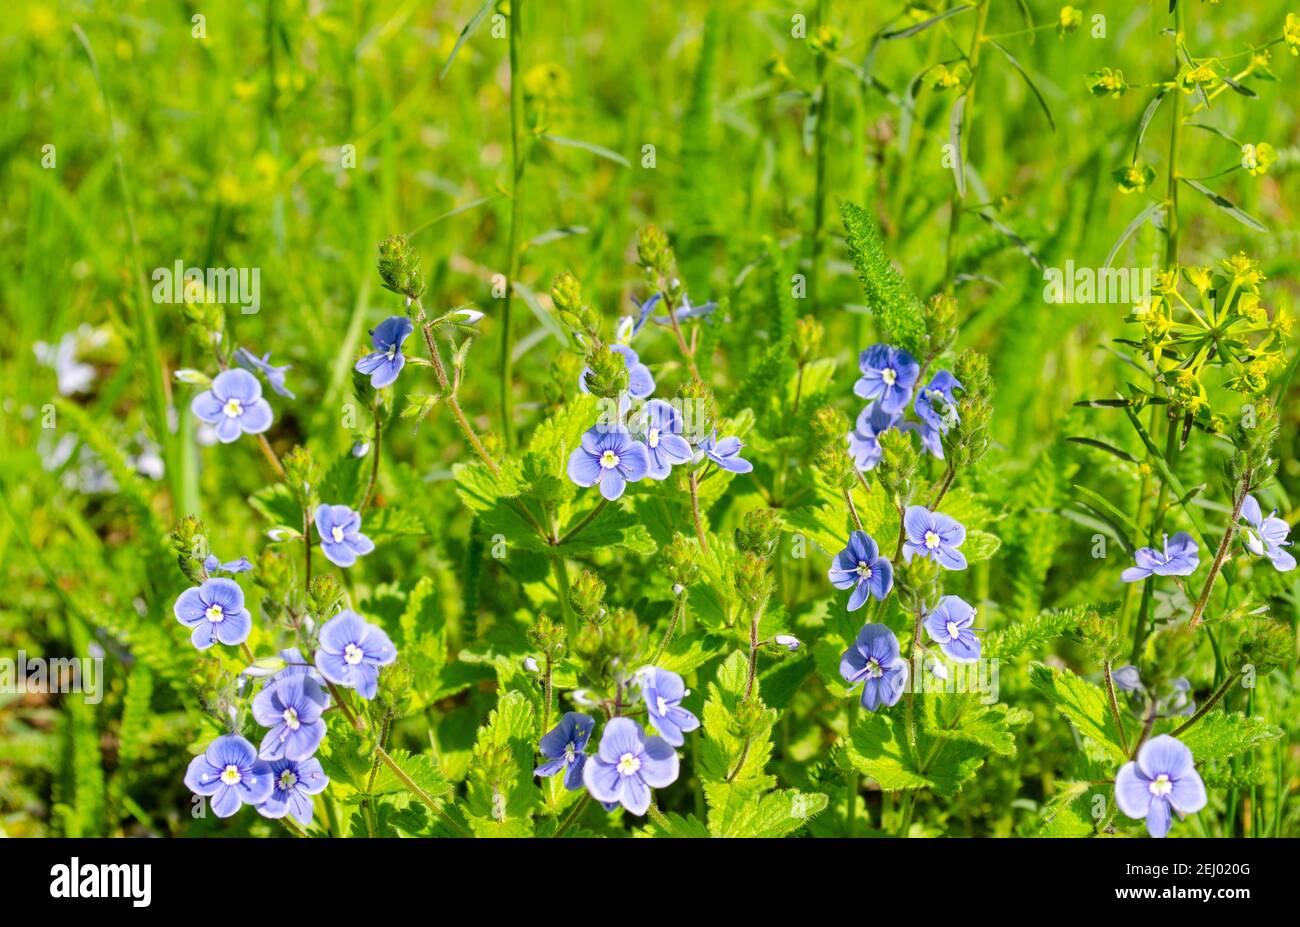 Small blue flowers of spring primrose Veronica hamedris germander speedwell, veronica bird's eye, cat's eyes in green grass. Stock Photo